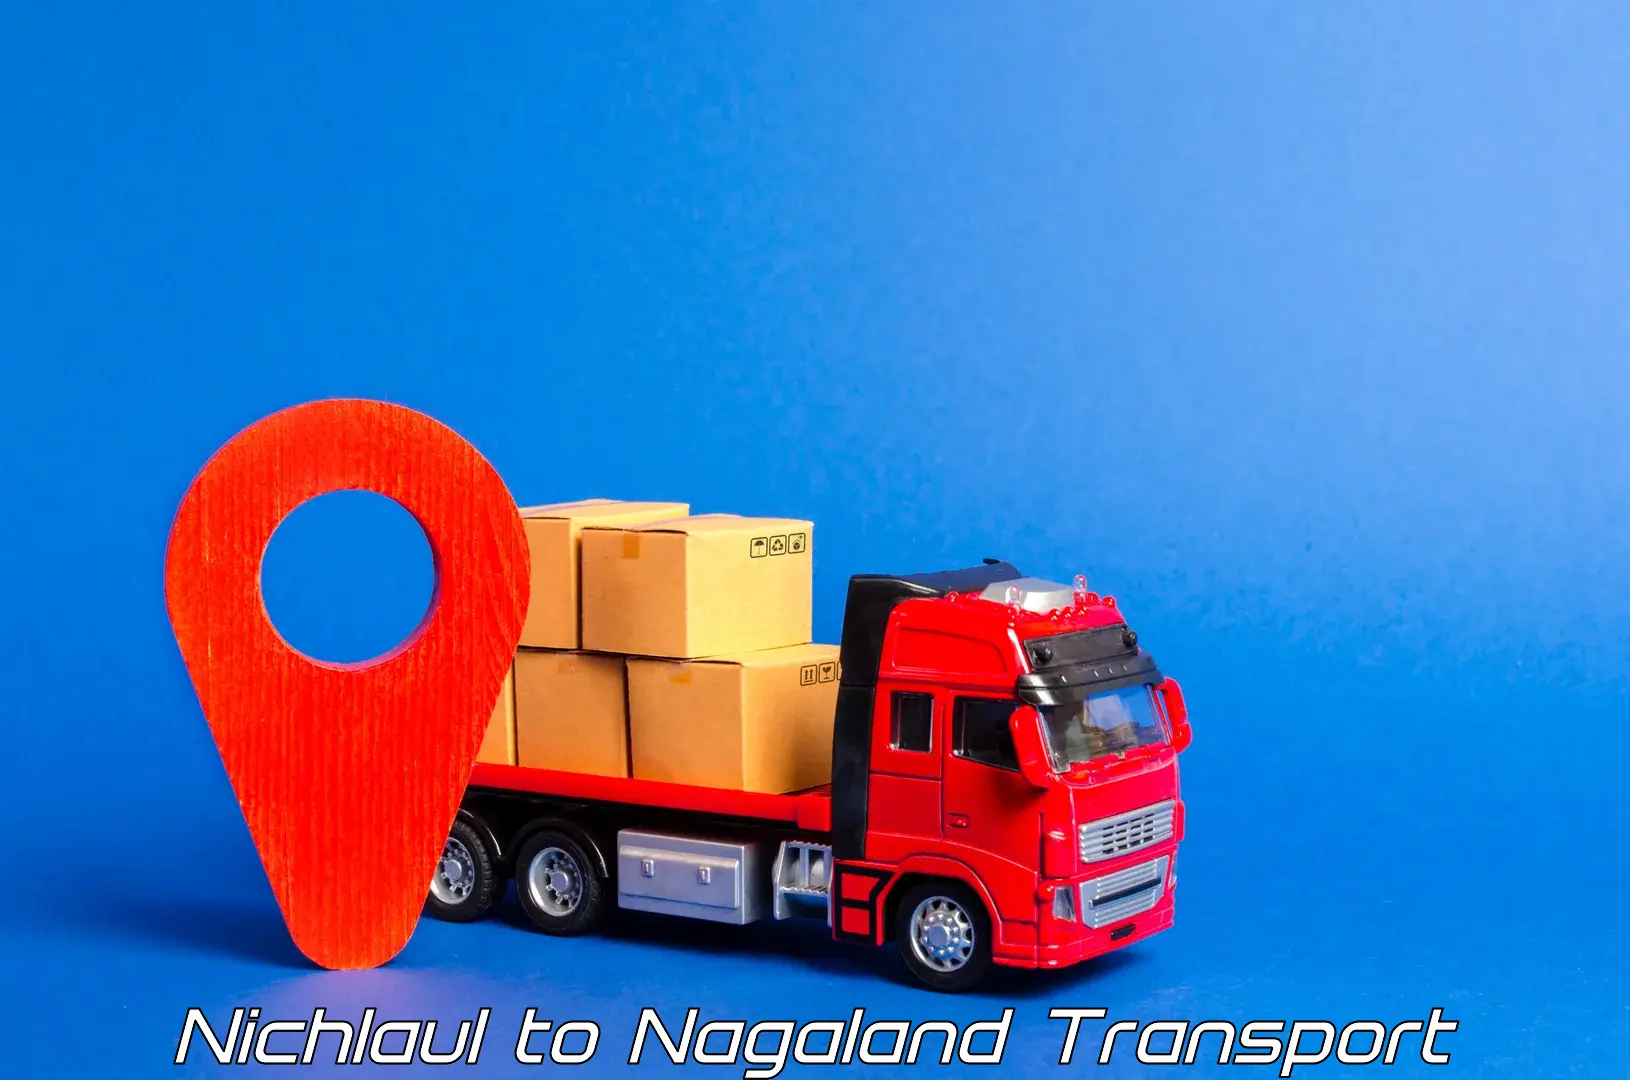 Container transport service Nichlaul to Zunheboto